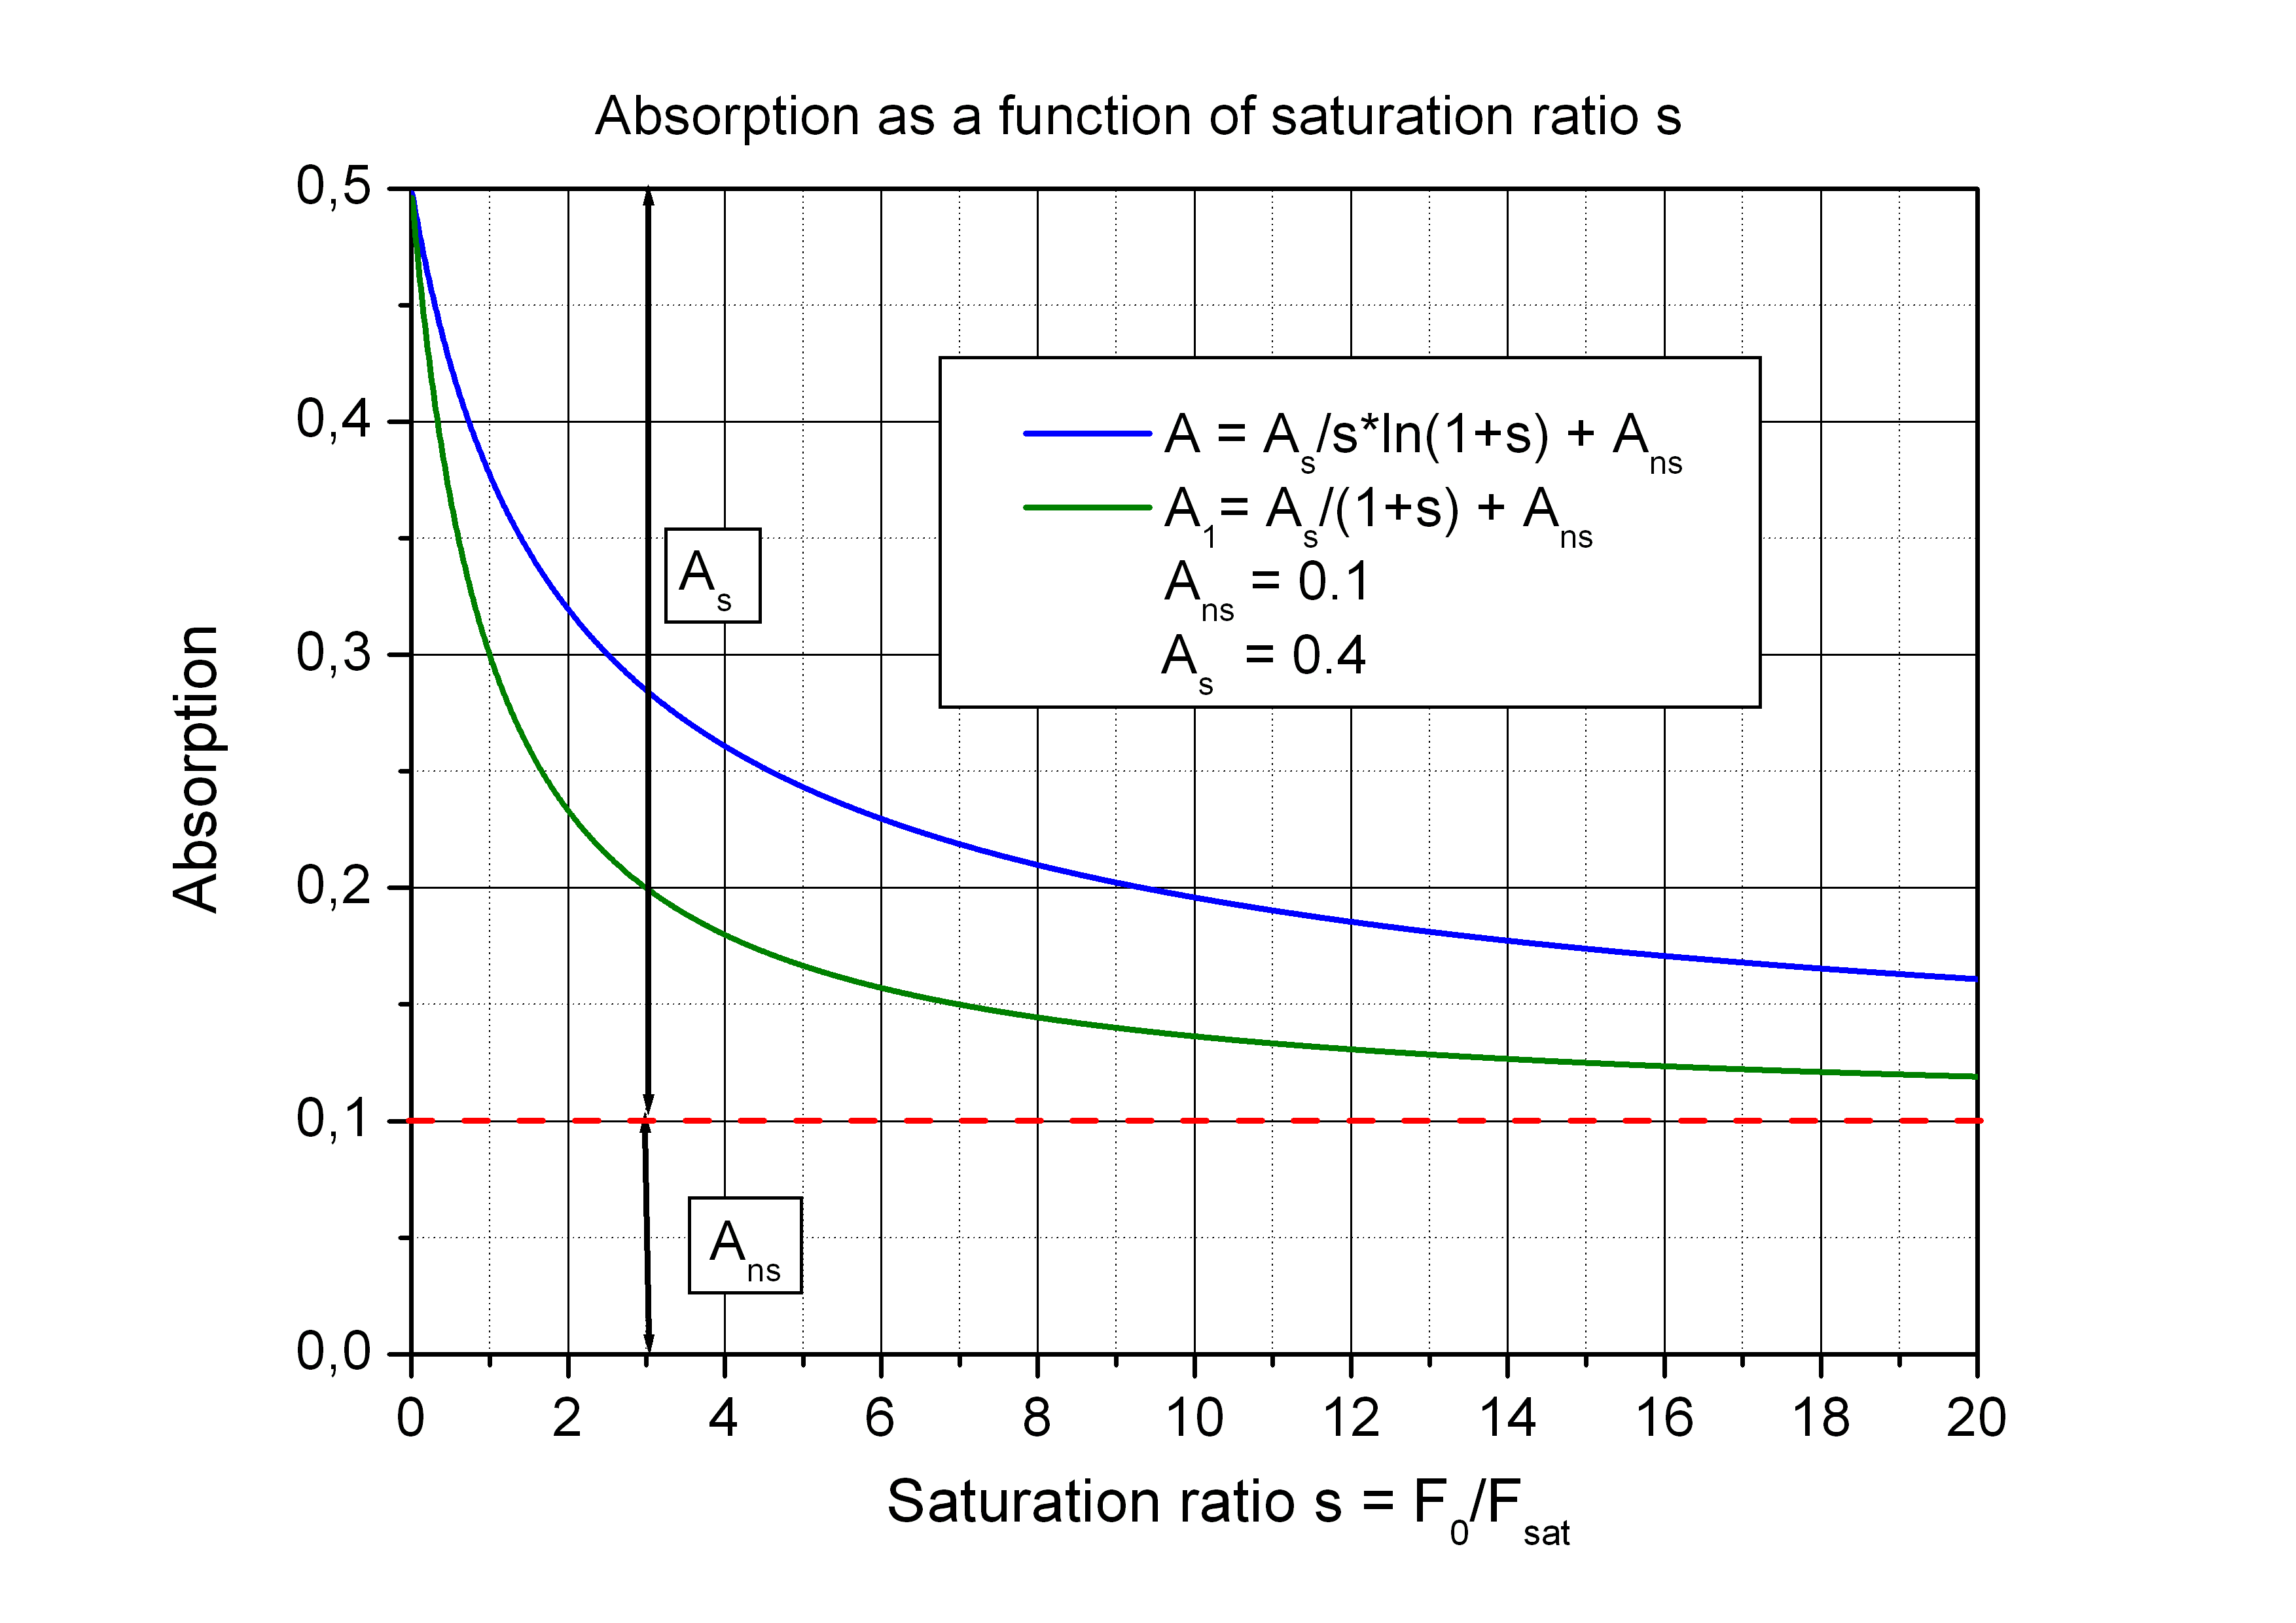 Figure absorption, linear scale